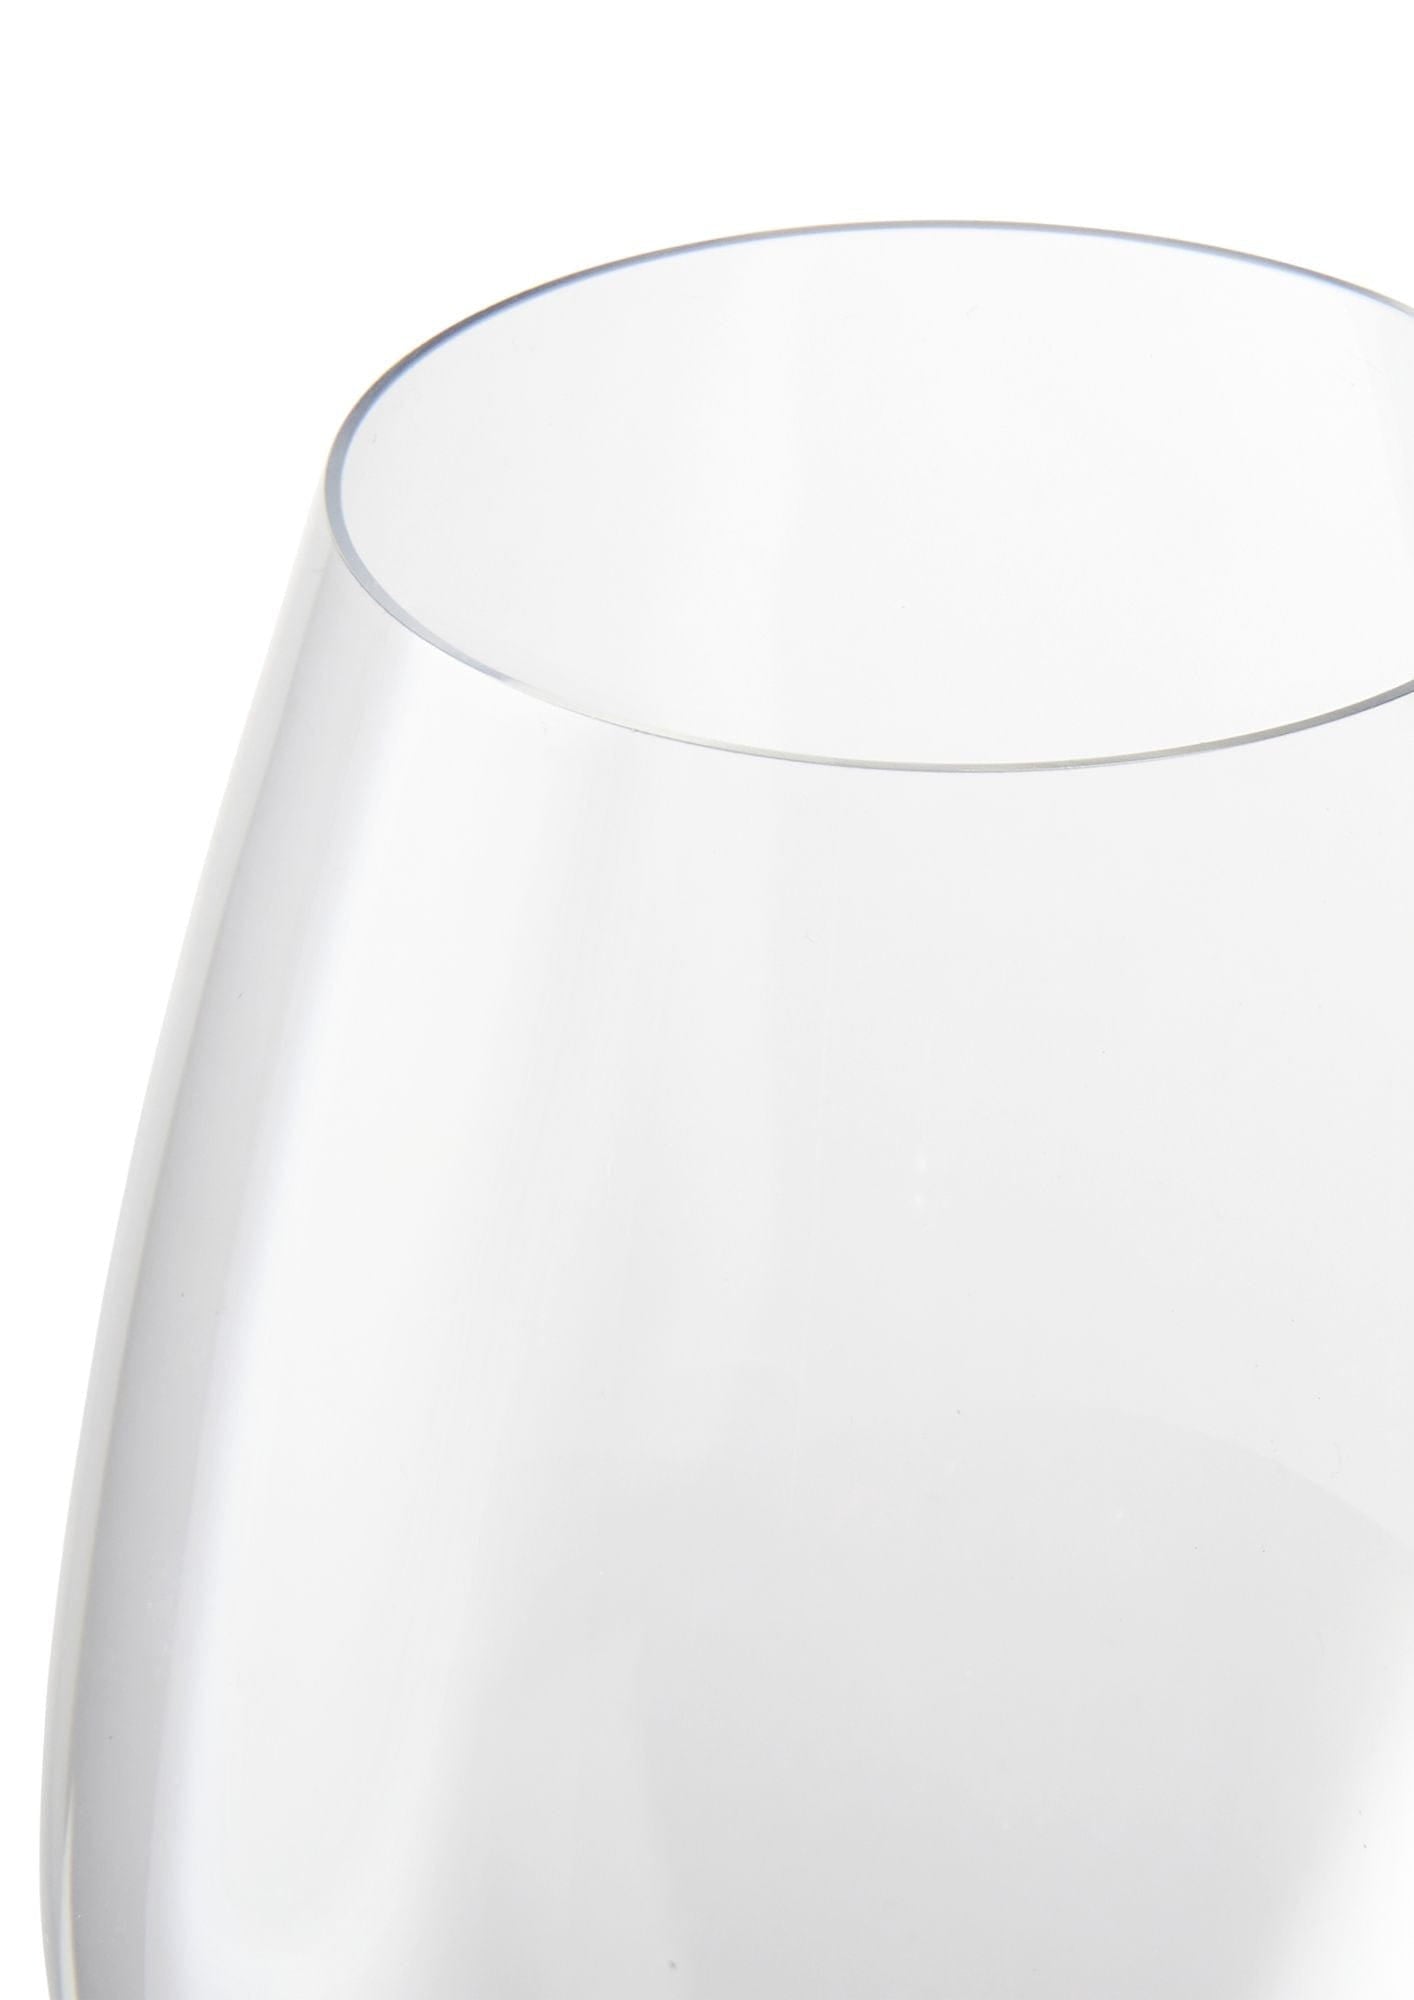 Rosendahl Premium Champagneglas 2 Stk. 370 ml